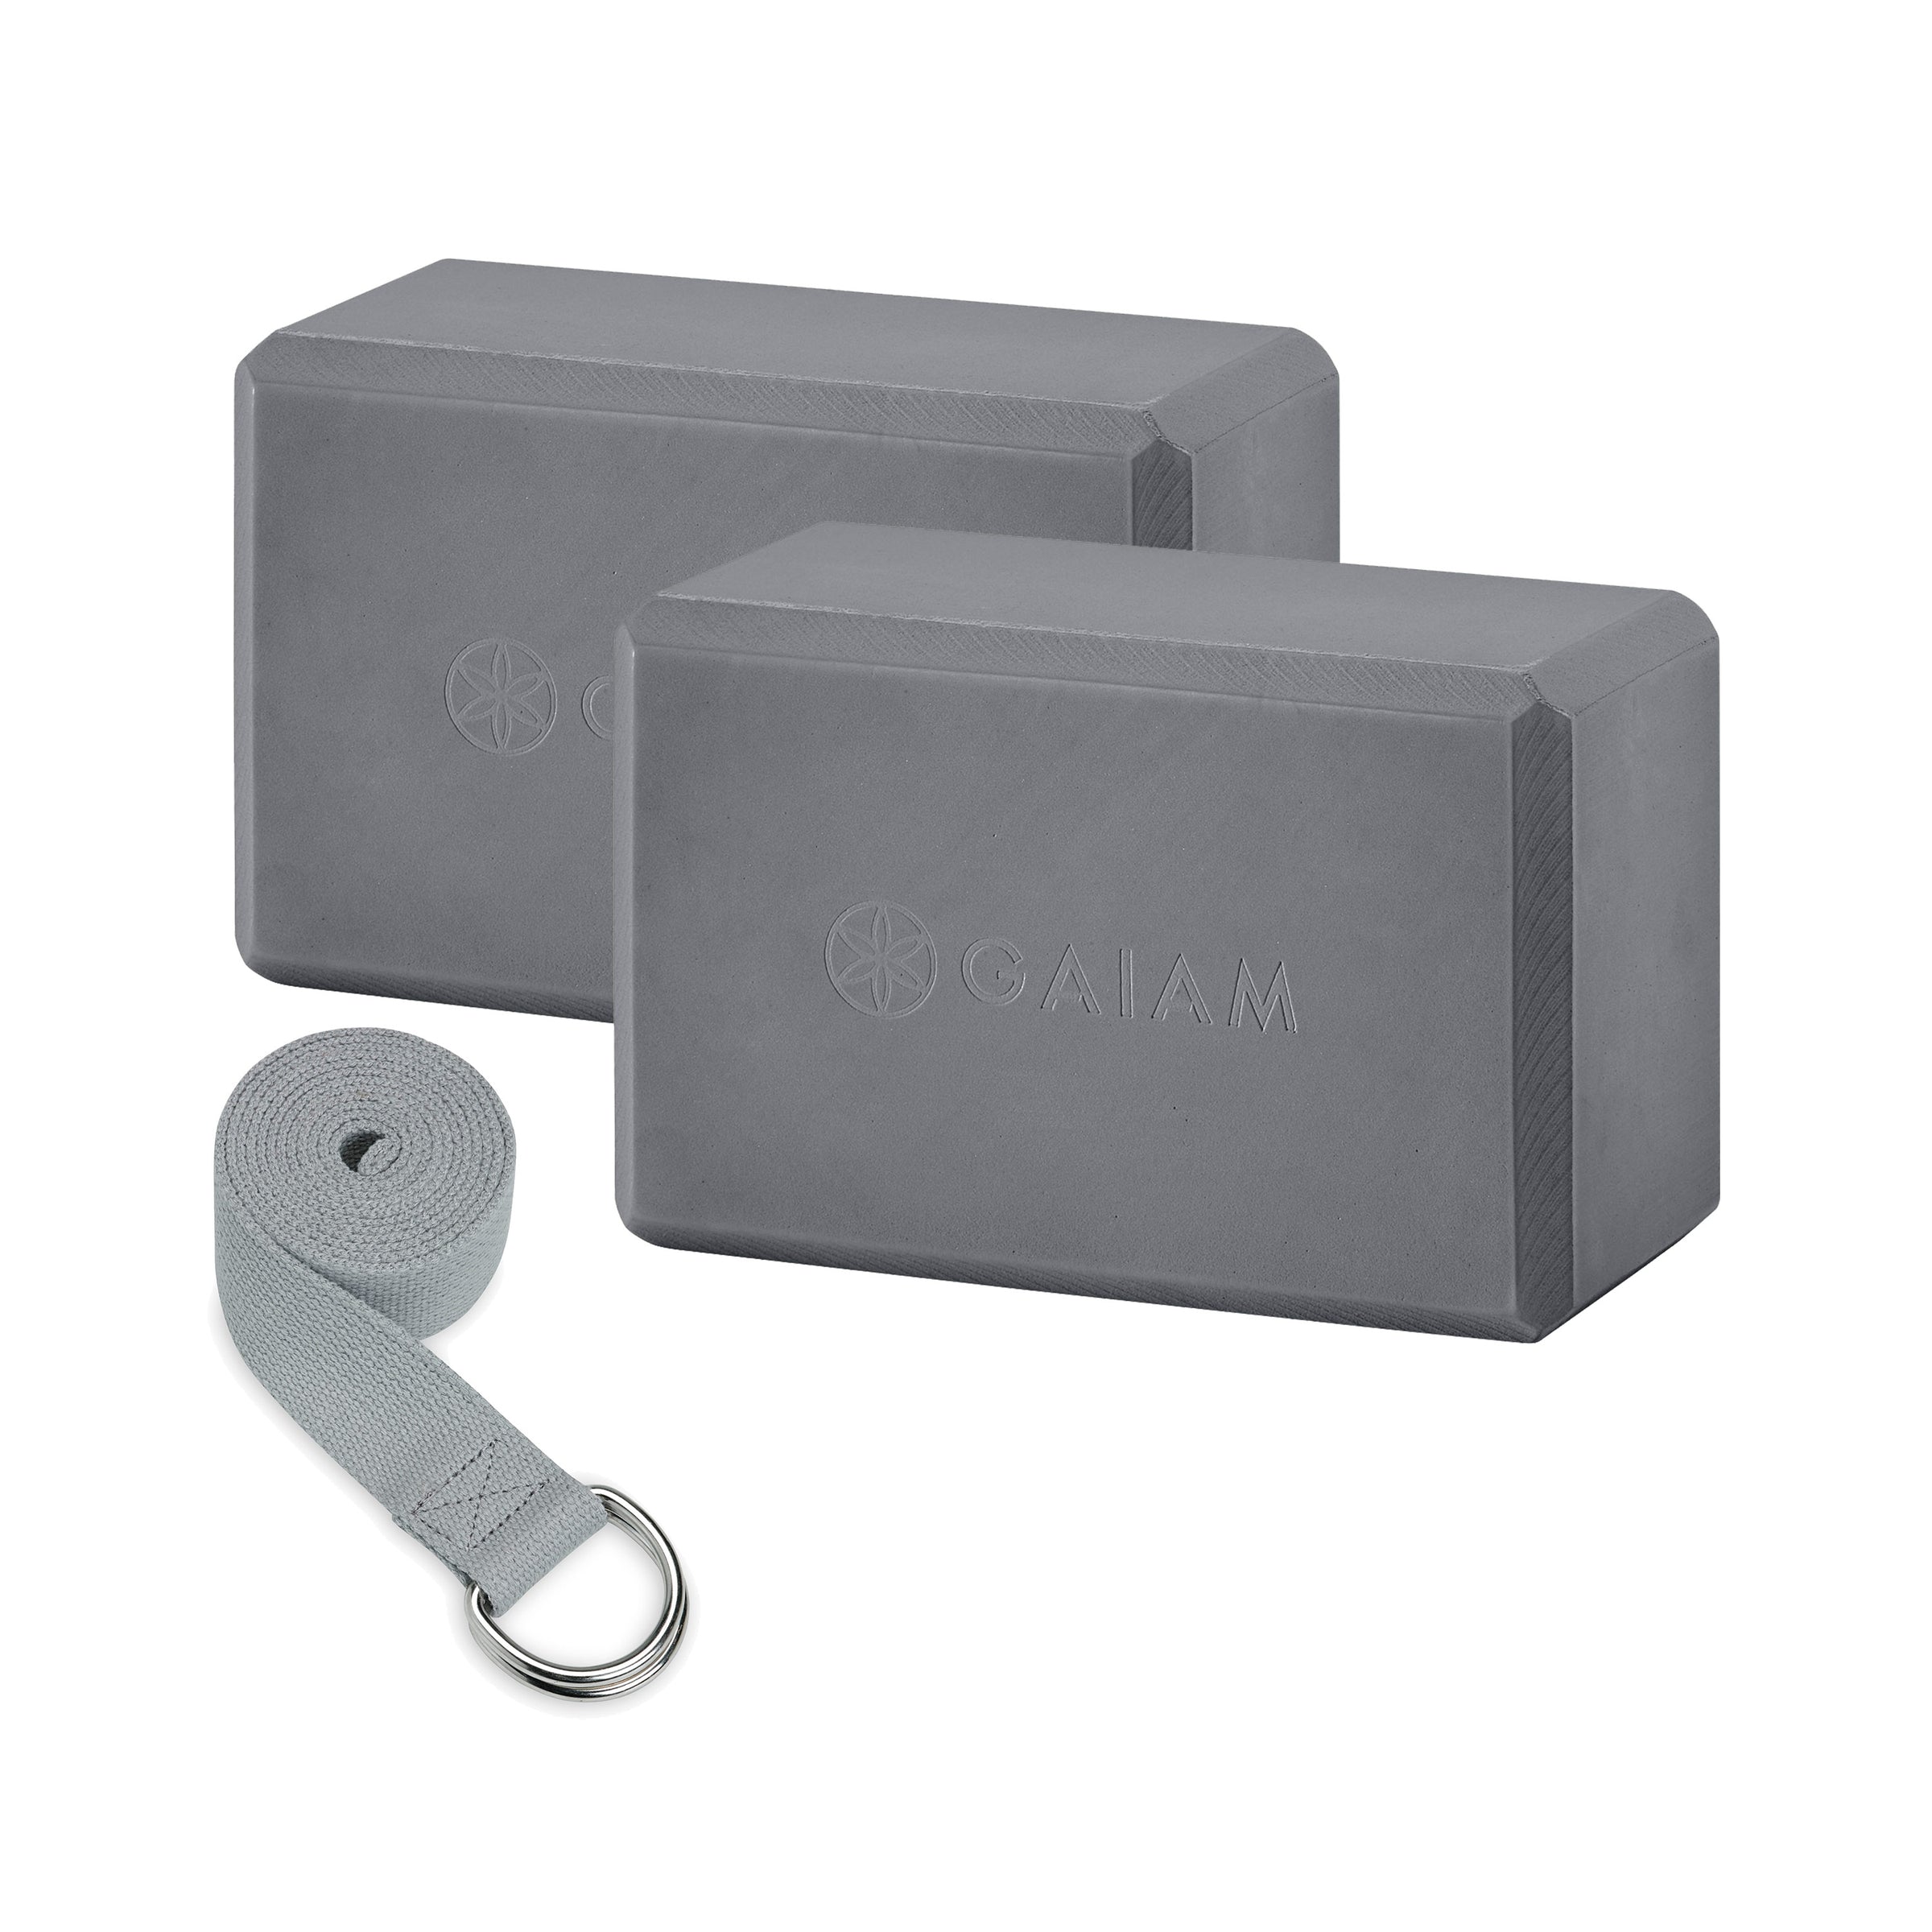 Gaiam Yoga Blocks and Straps – Yoga Blocks 2 Pack With Strap – GetACTV